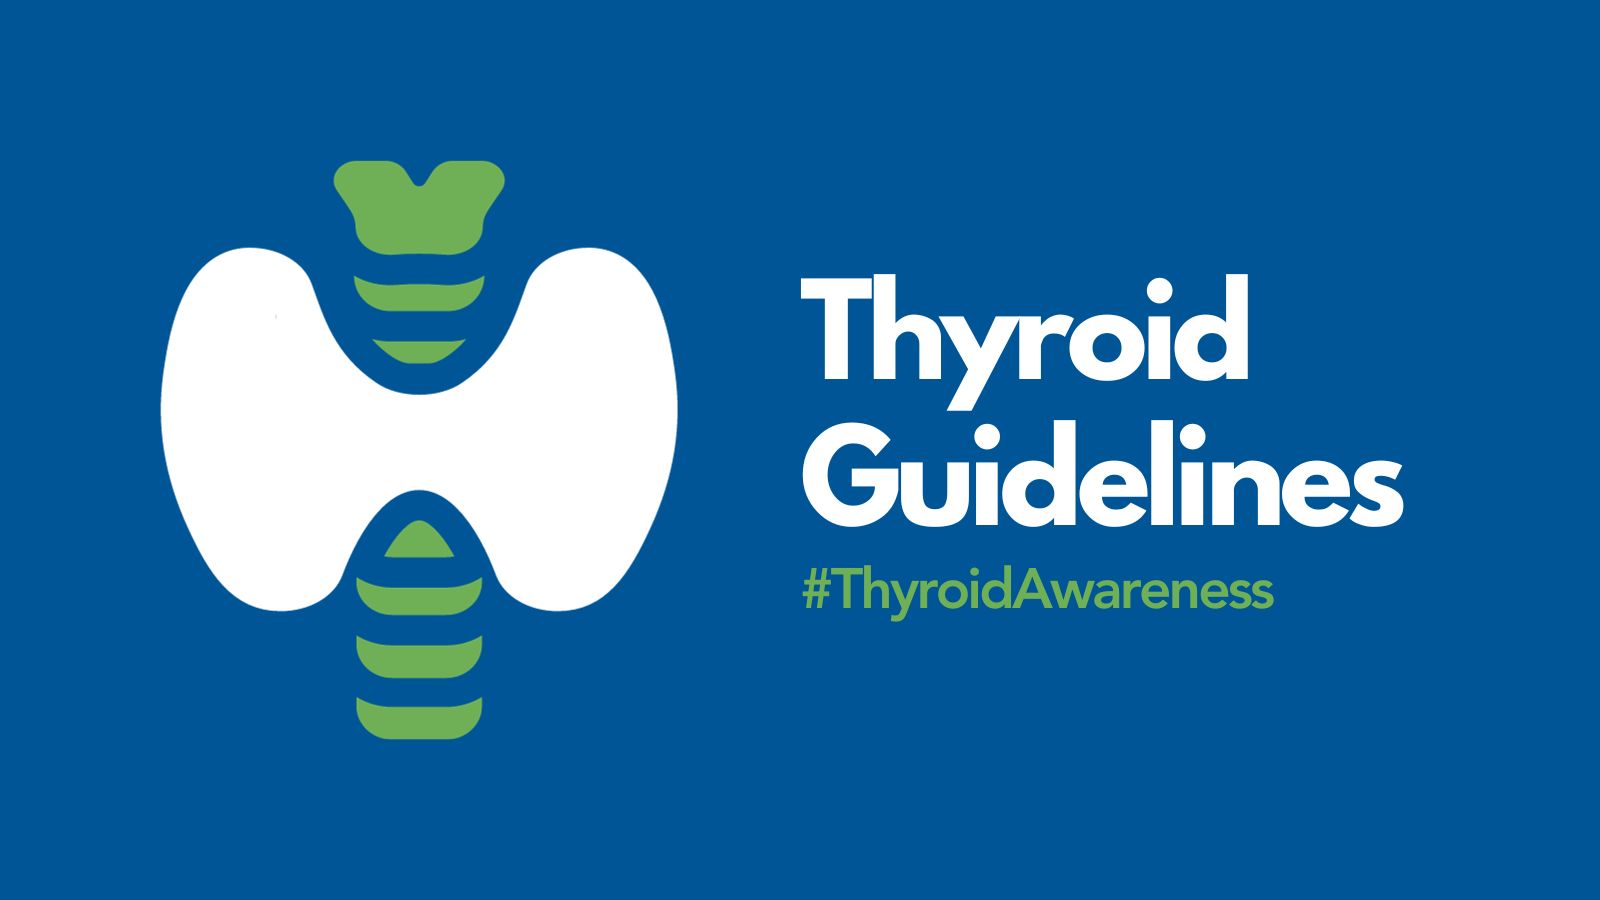 National Thyroid Awareness Month